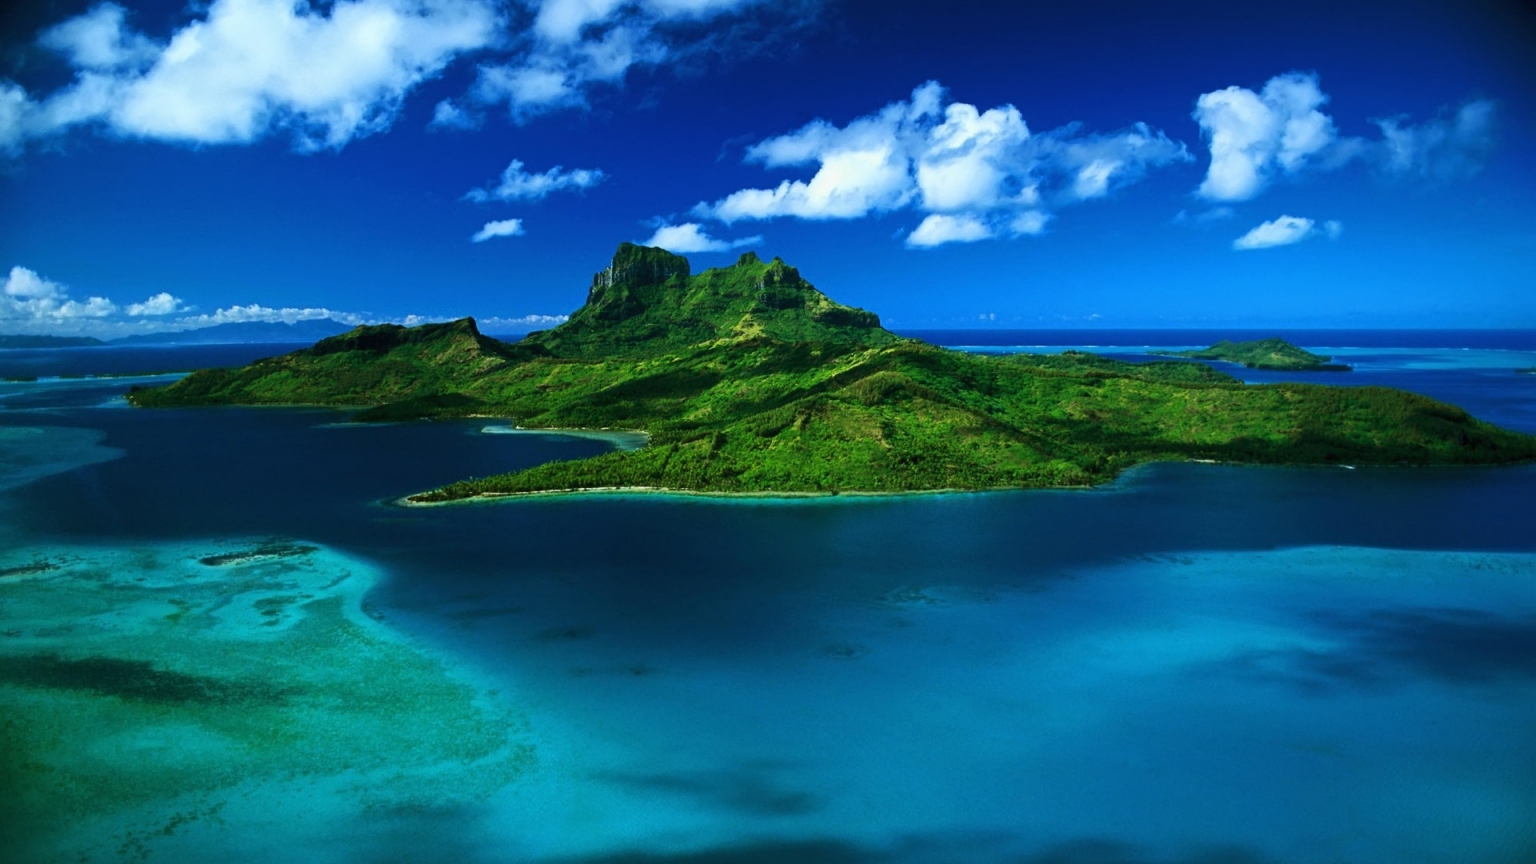 Mauritius Island for 1536 x 864 HDTV resolution